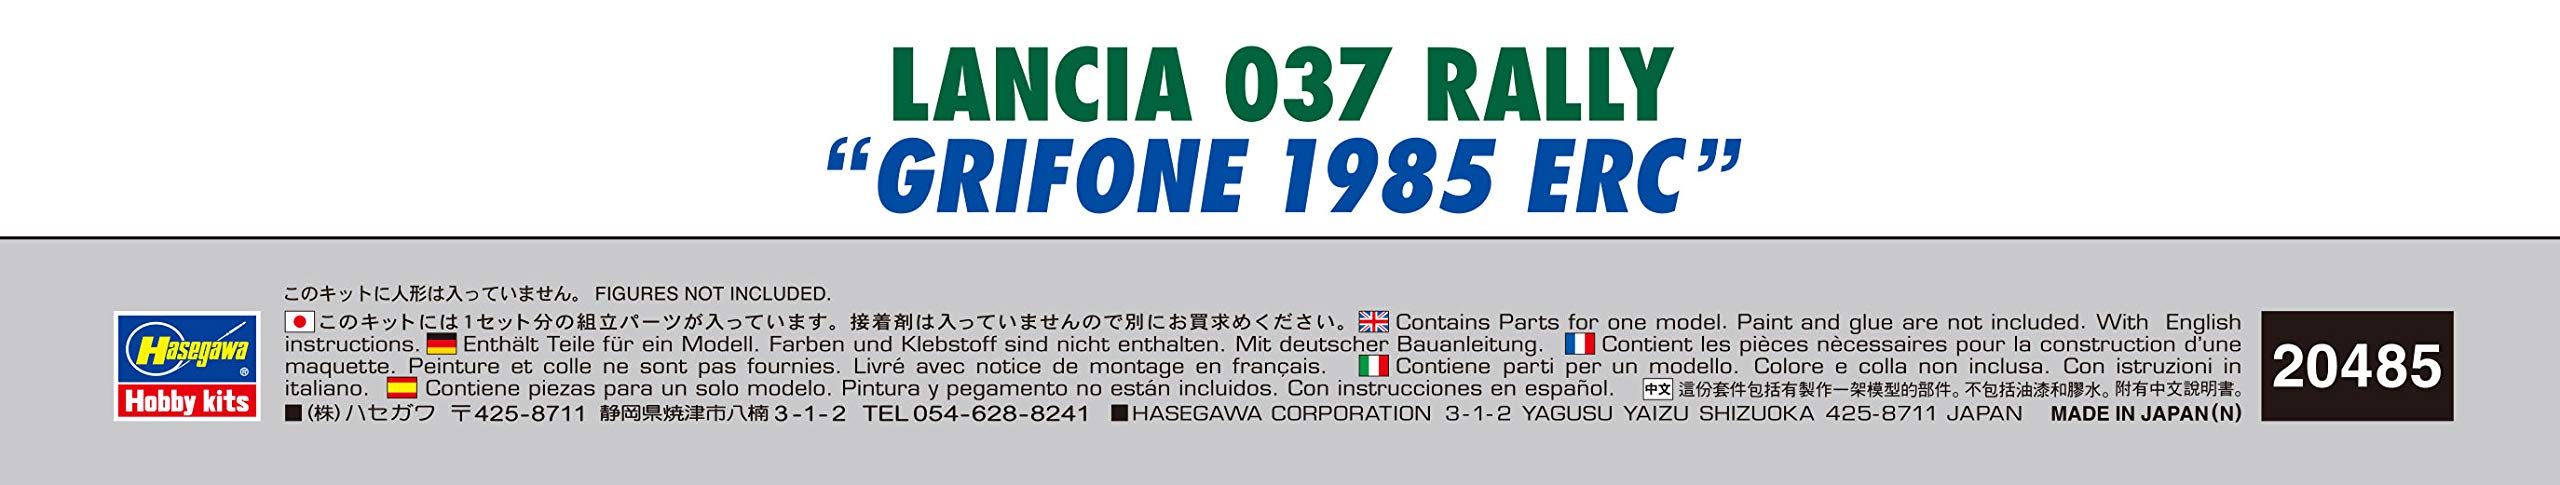 Hasegawa 1/24 Lancia 037 Rally Grifone 1985 Erc Japanese Scale Cars Pvc Model Kit